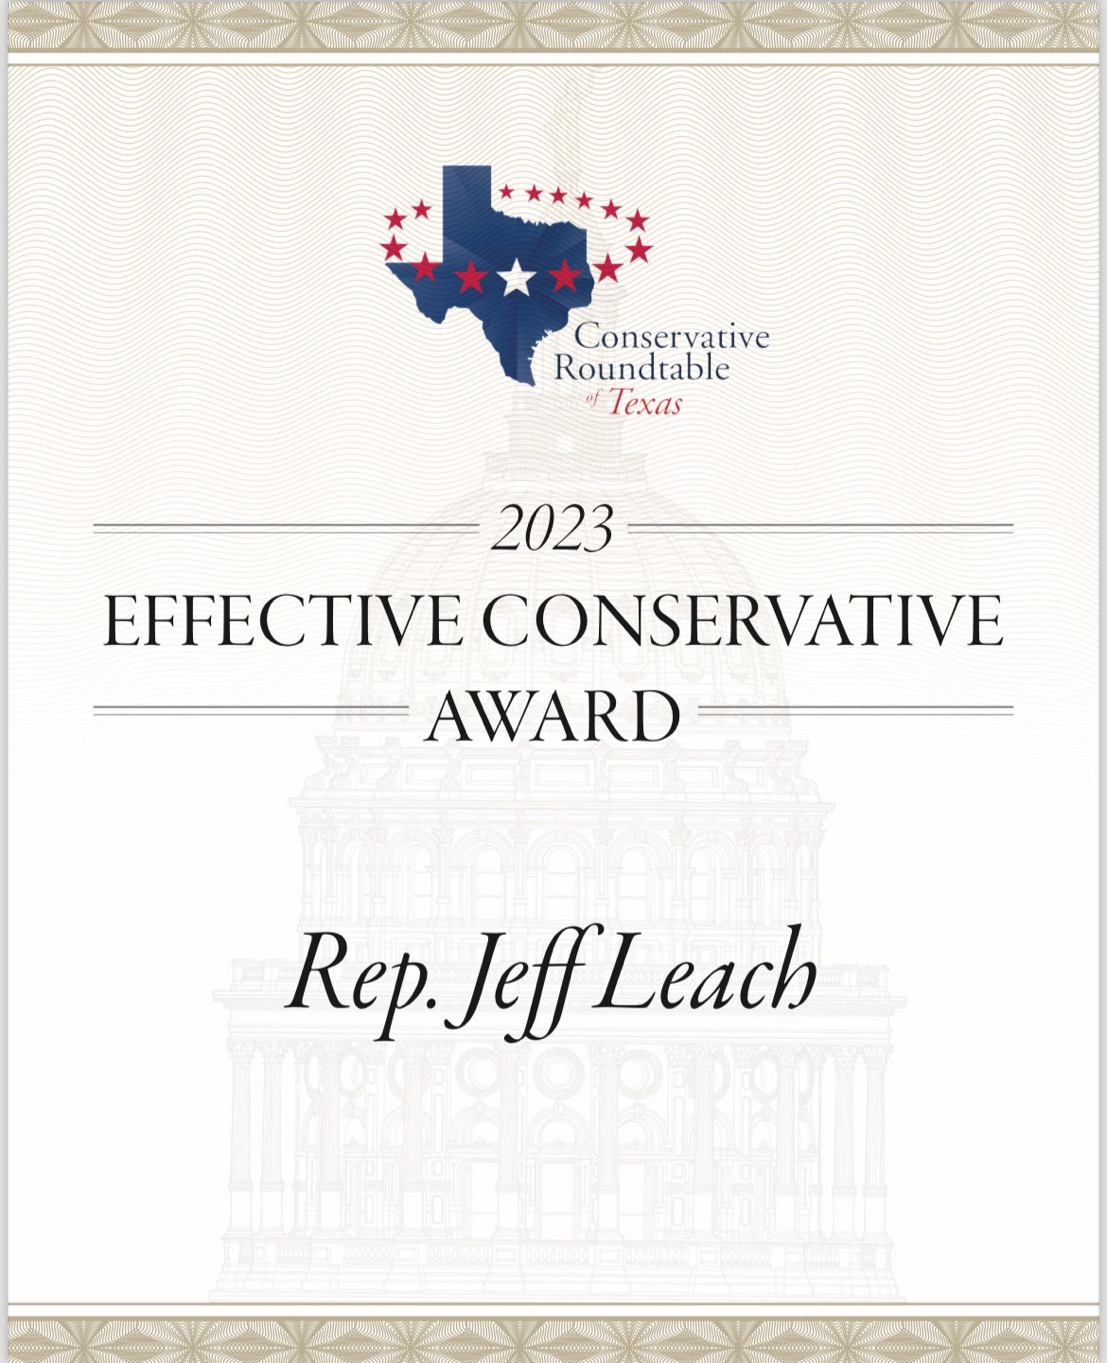 Jeff Leach Earns the Effective Conservative Award!